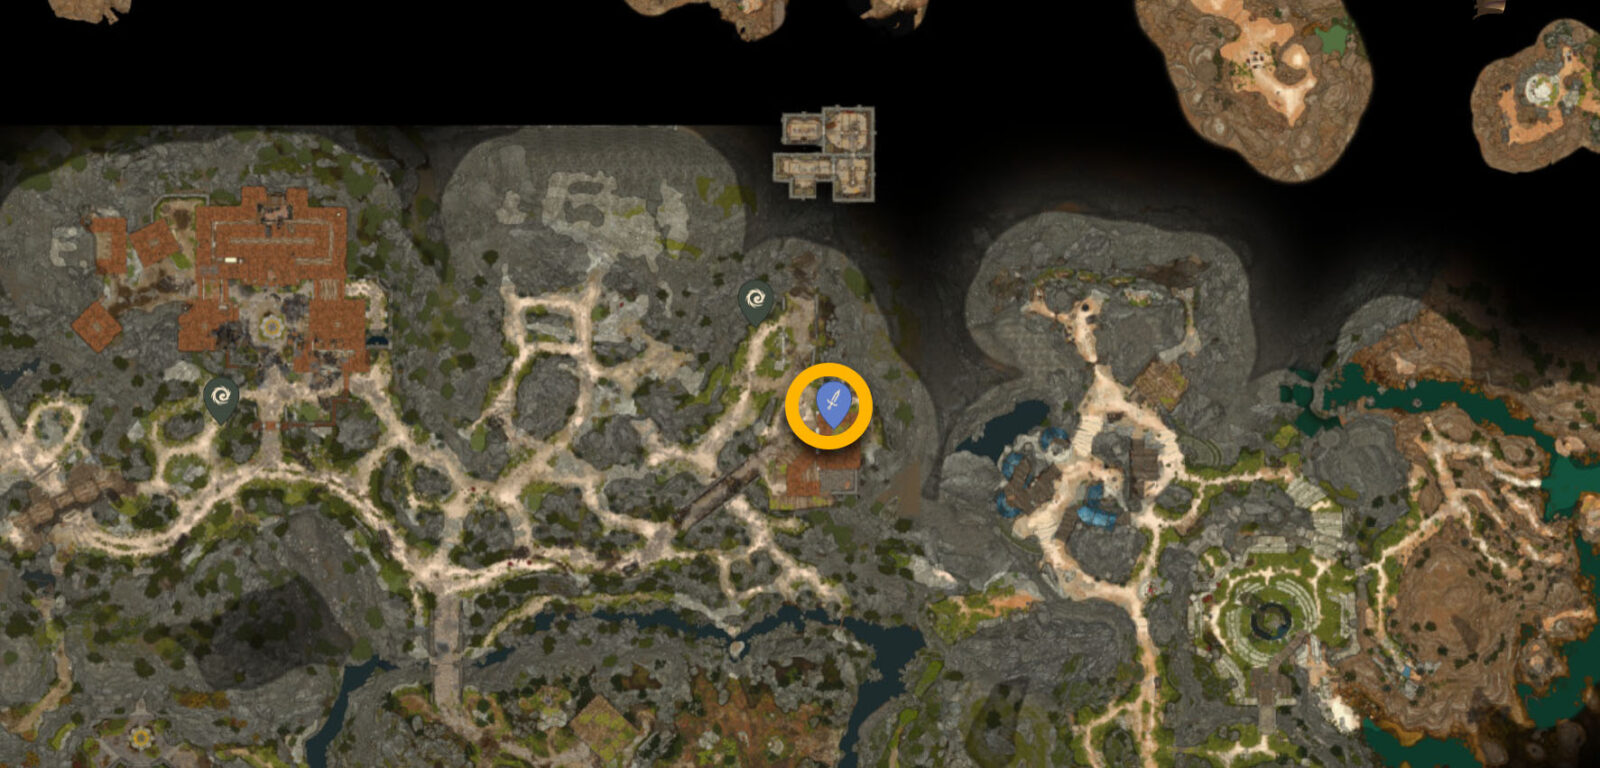 Sword of Justice Location in BG3